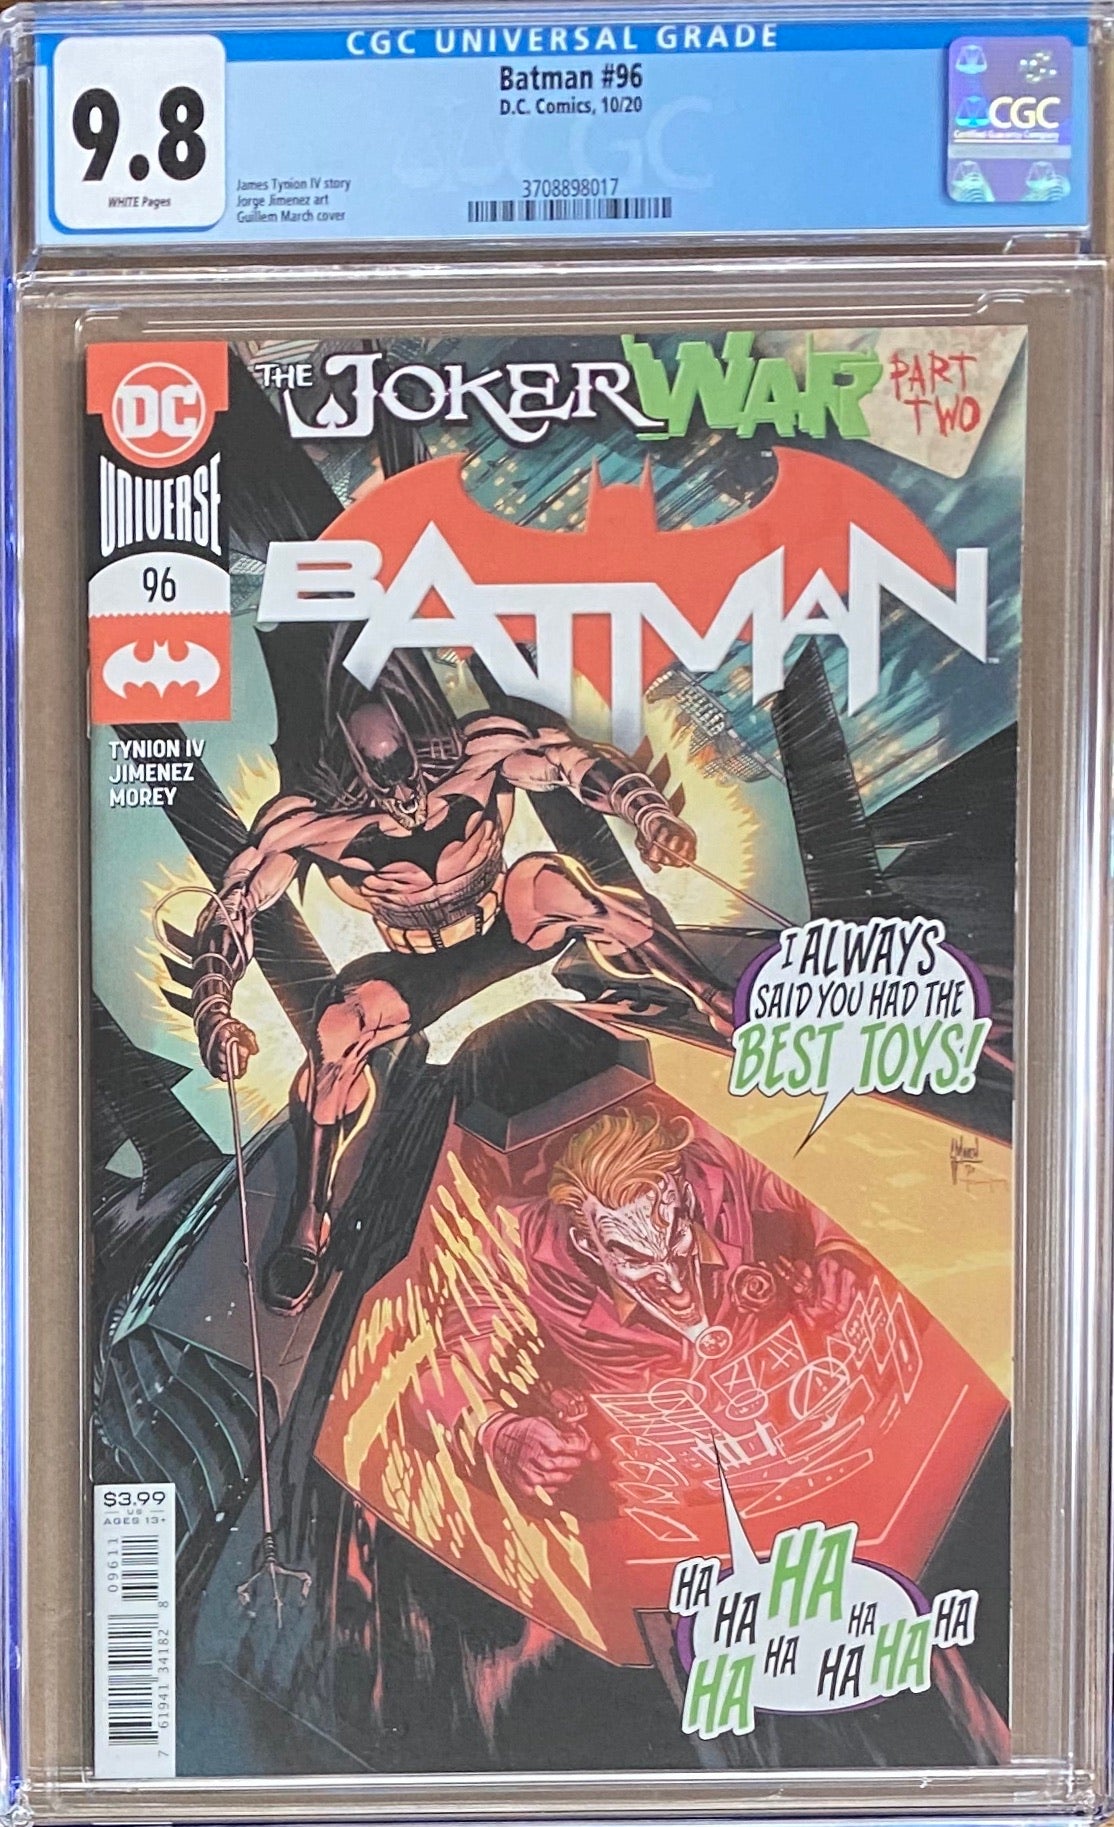 Batman #96 CGC 9.8 - First appearance Clownhunter